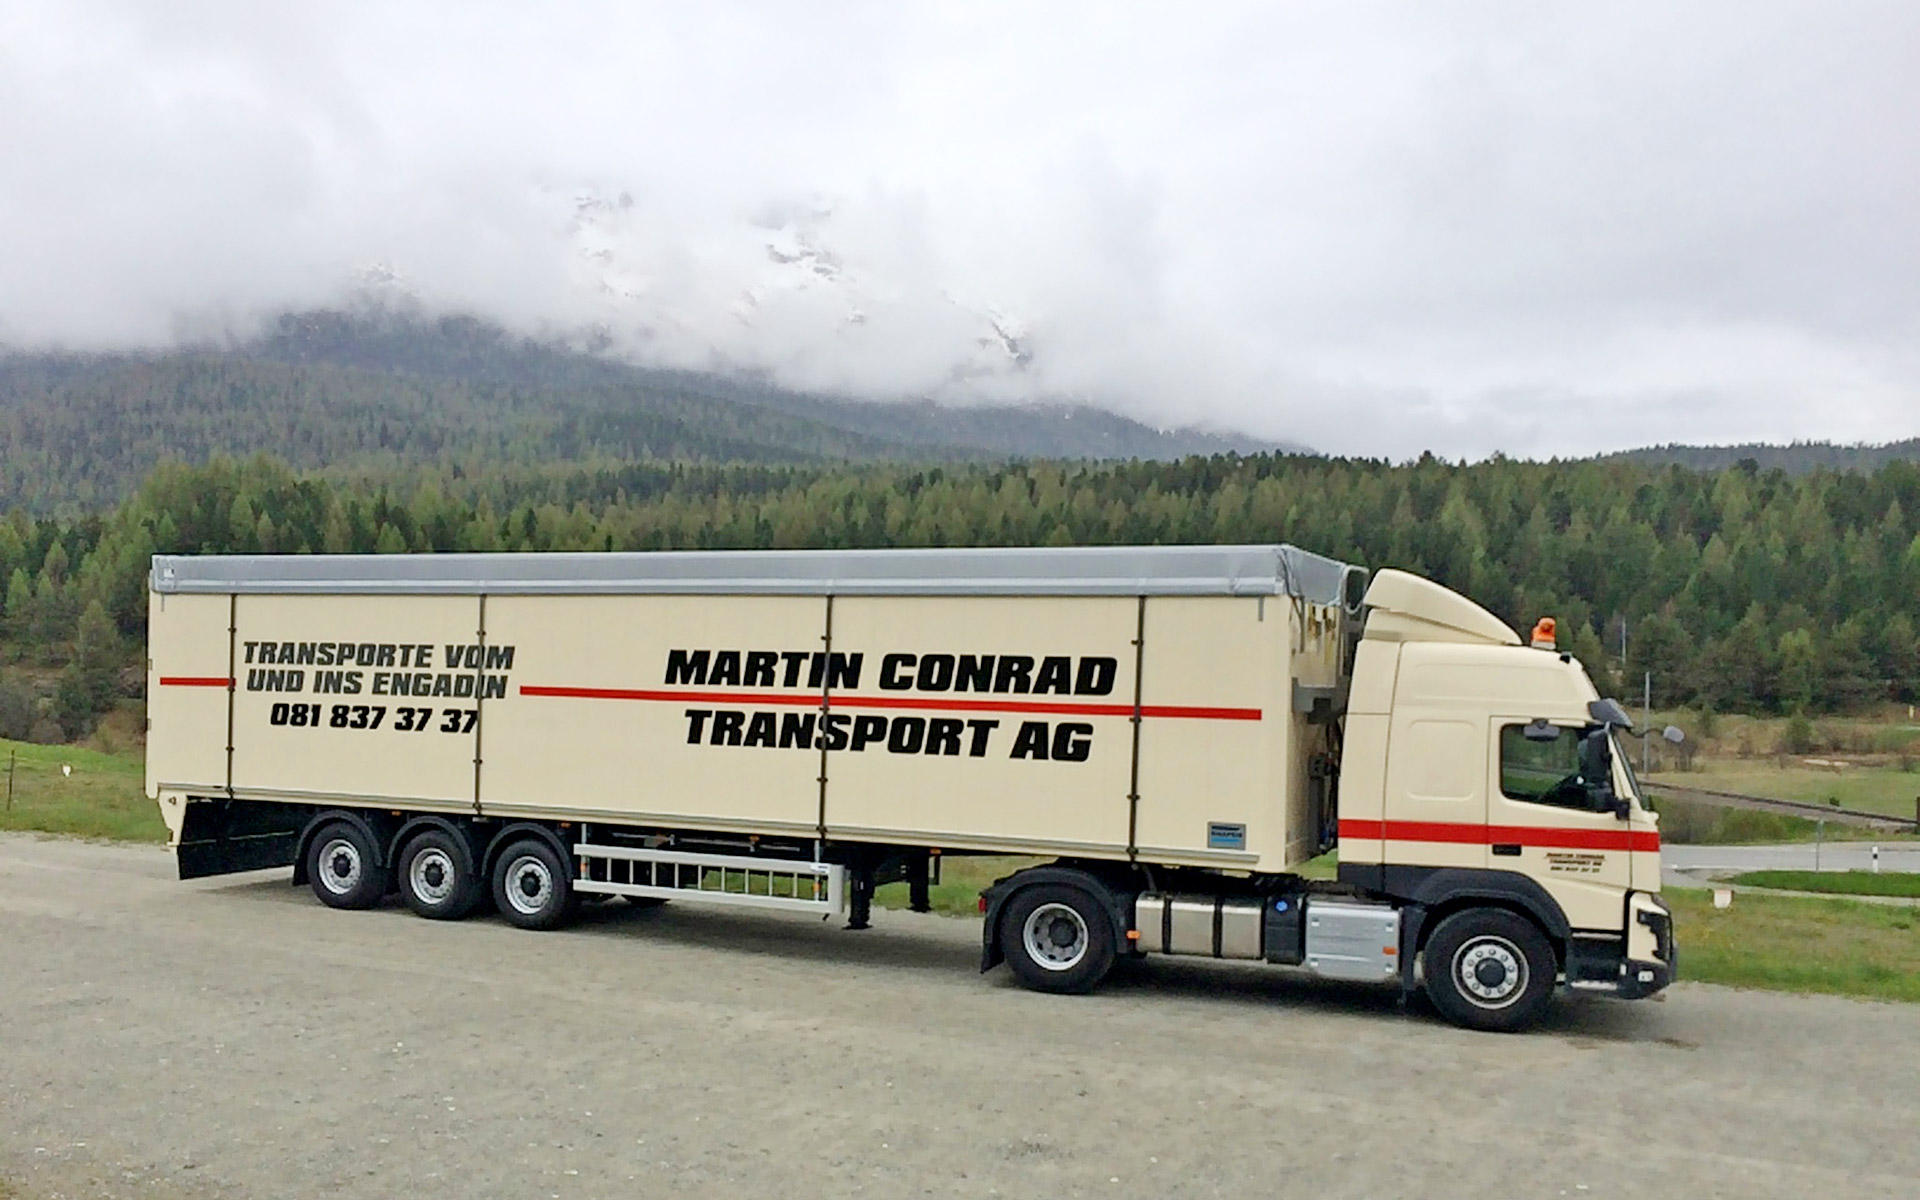 Martin Conrad Transport AG